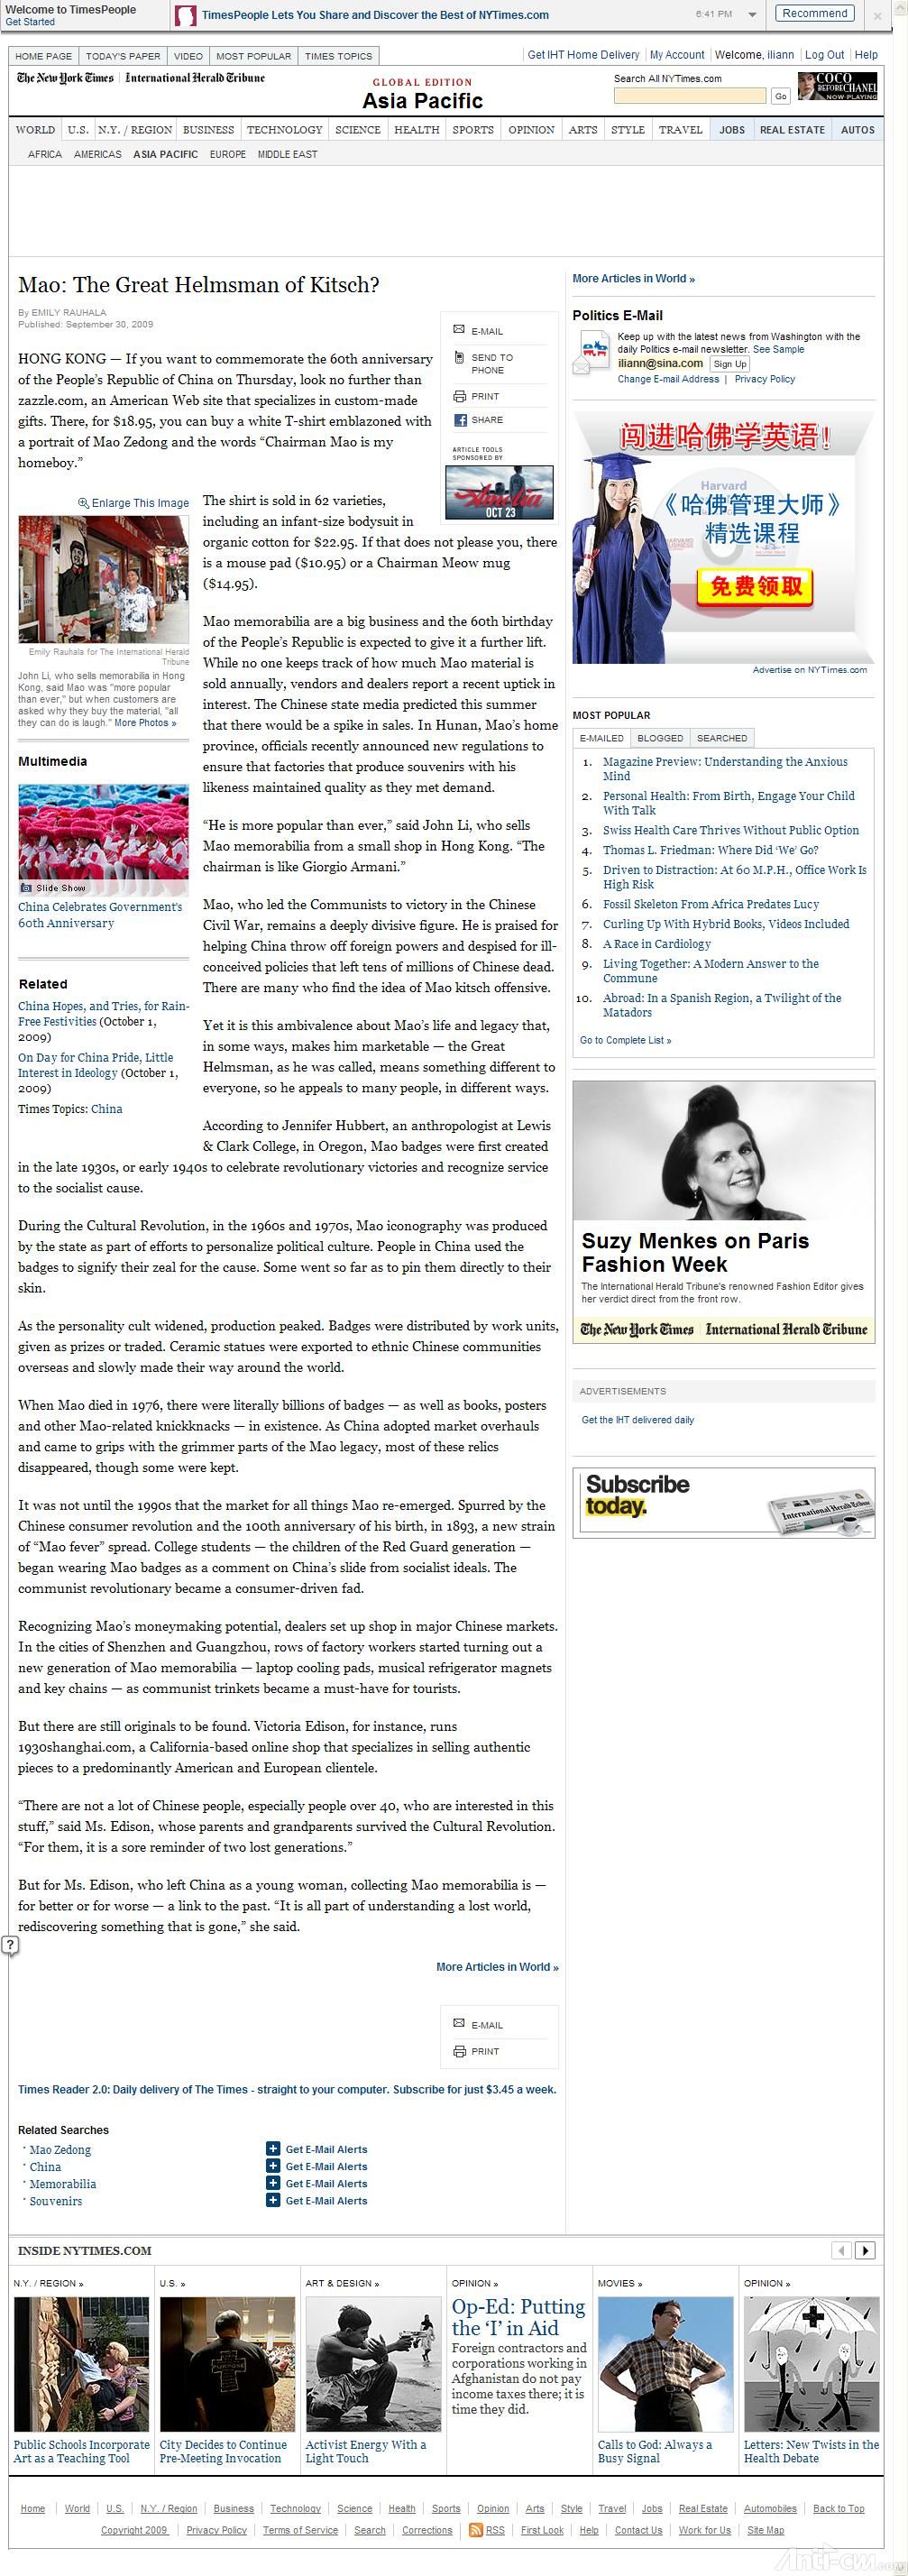 Mao - The Great Helmsman of Kitsch_ - NYTimes.jpg